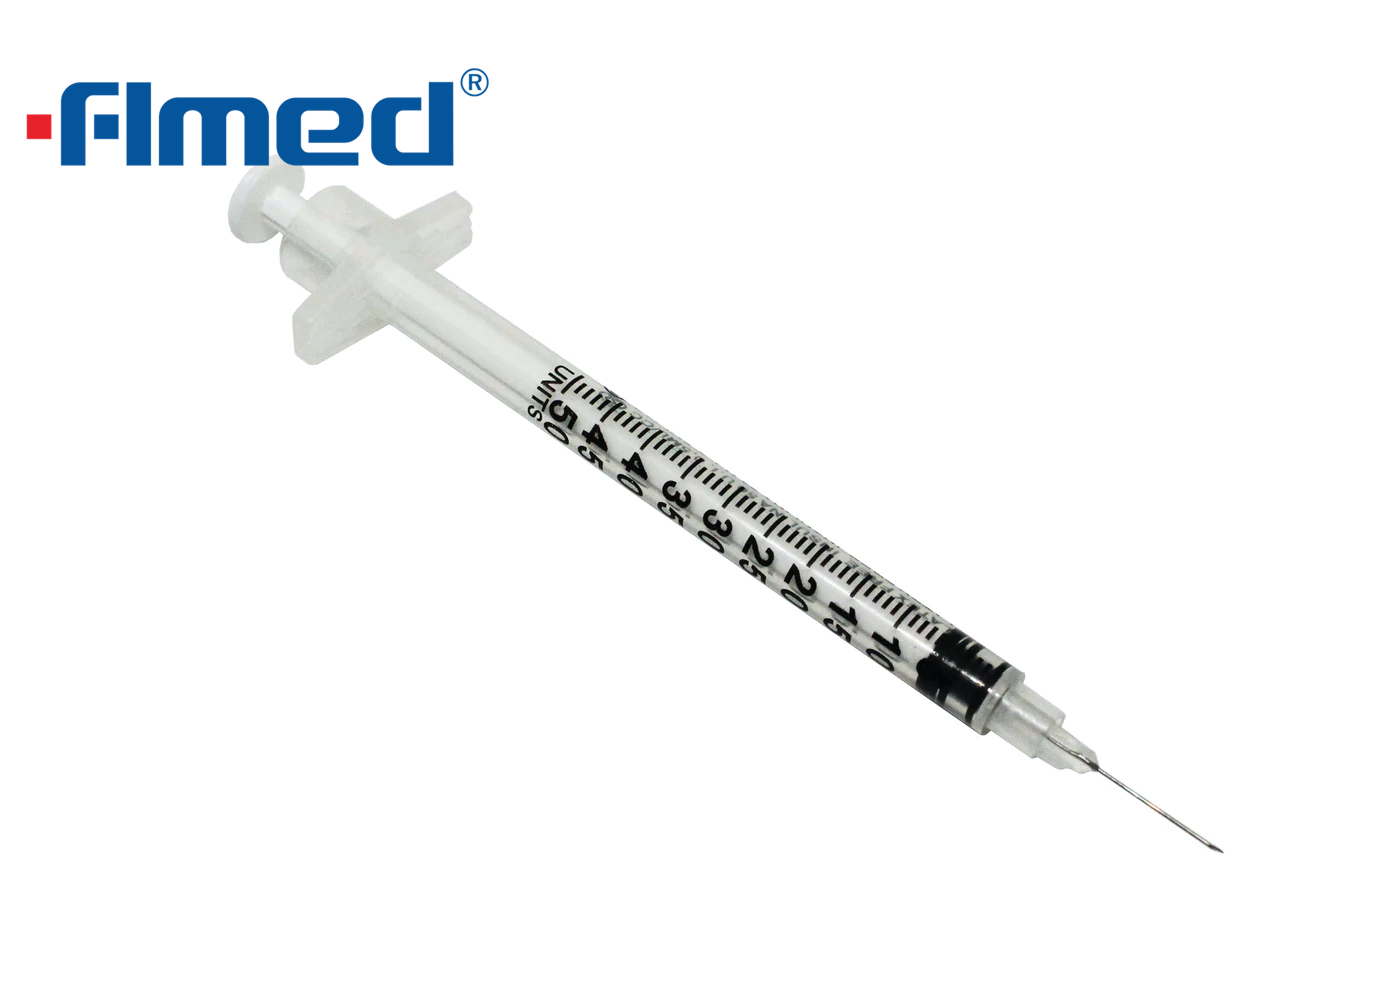 0.5ml Insulin Syringe & Needle 29g X 13mm (29G X 1/2" Inch)